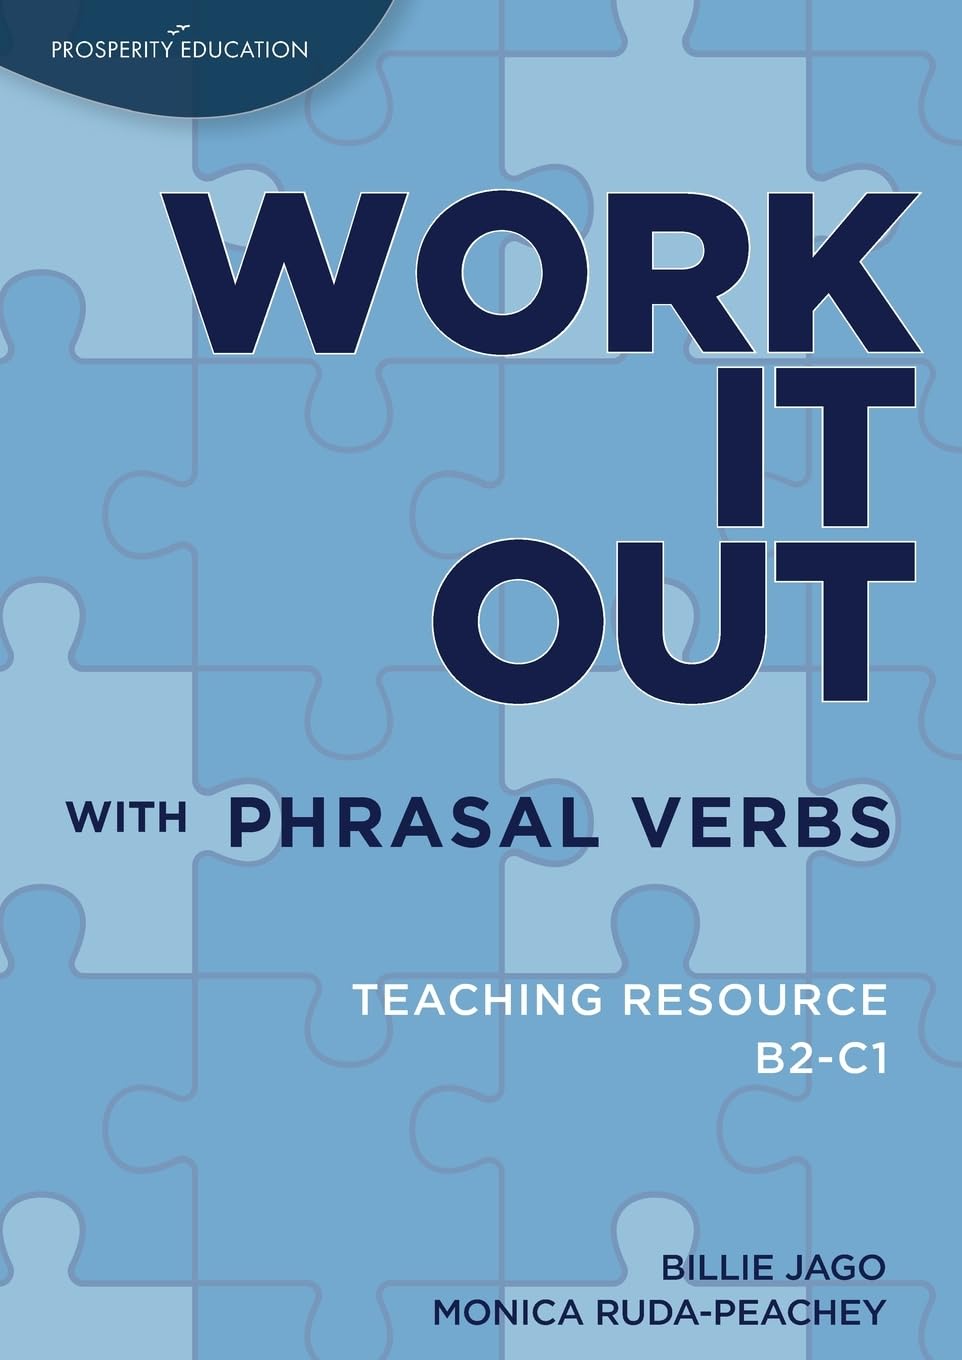 Work It Out With Phrasal Verbs Teaching Resource - Teaching Resource B2-C1 | Monica Ruda-Peachey, Billie Jago